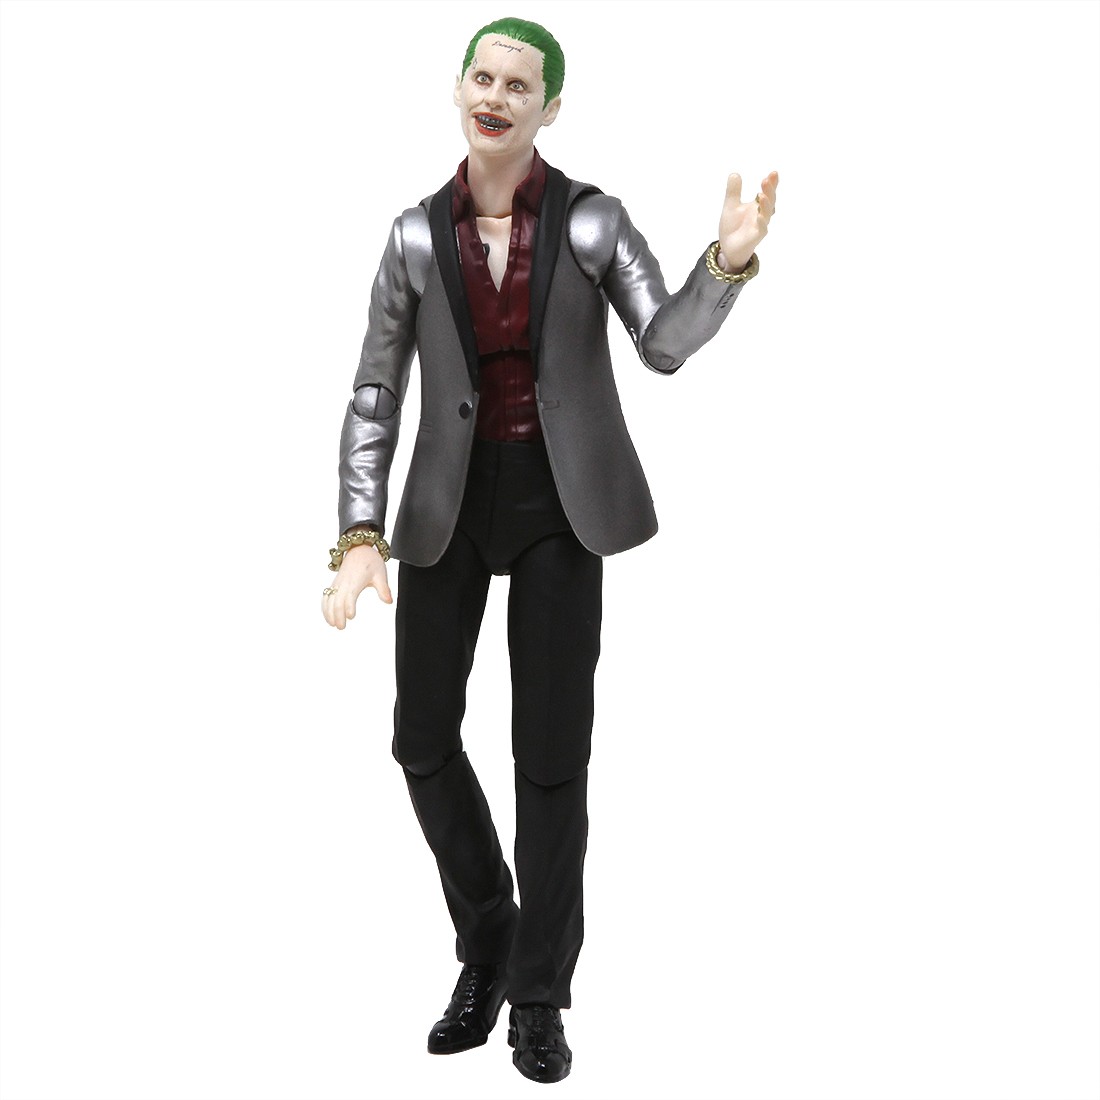 Bandai S.H.Figuarts Suicide Squad The Joker Figure (silver)